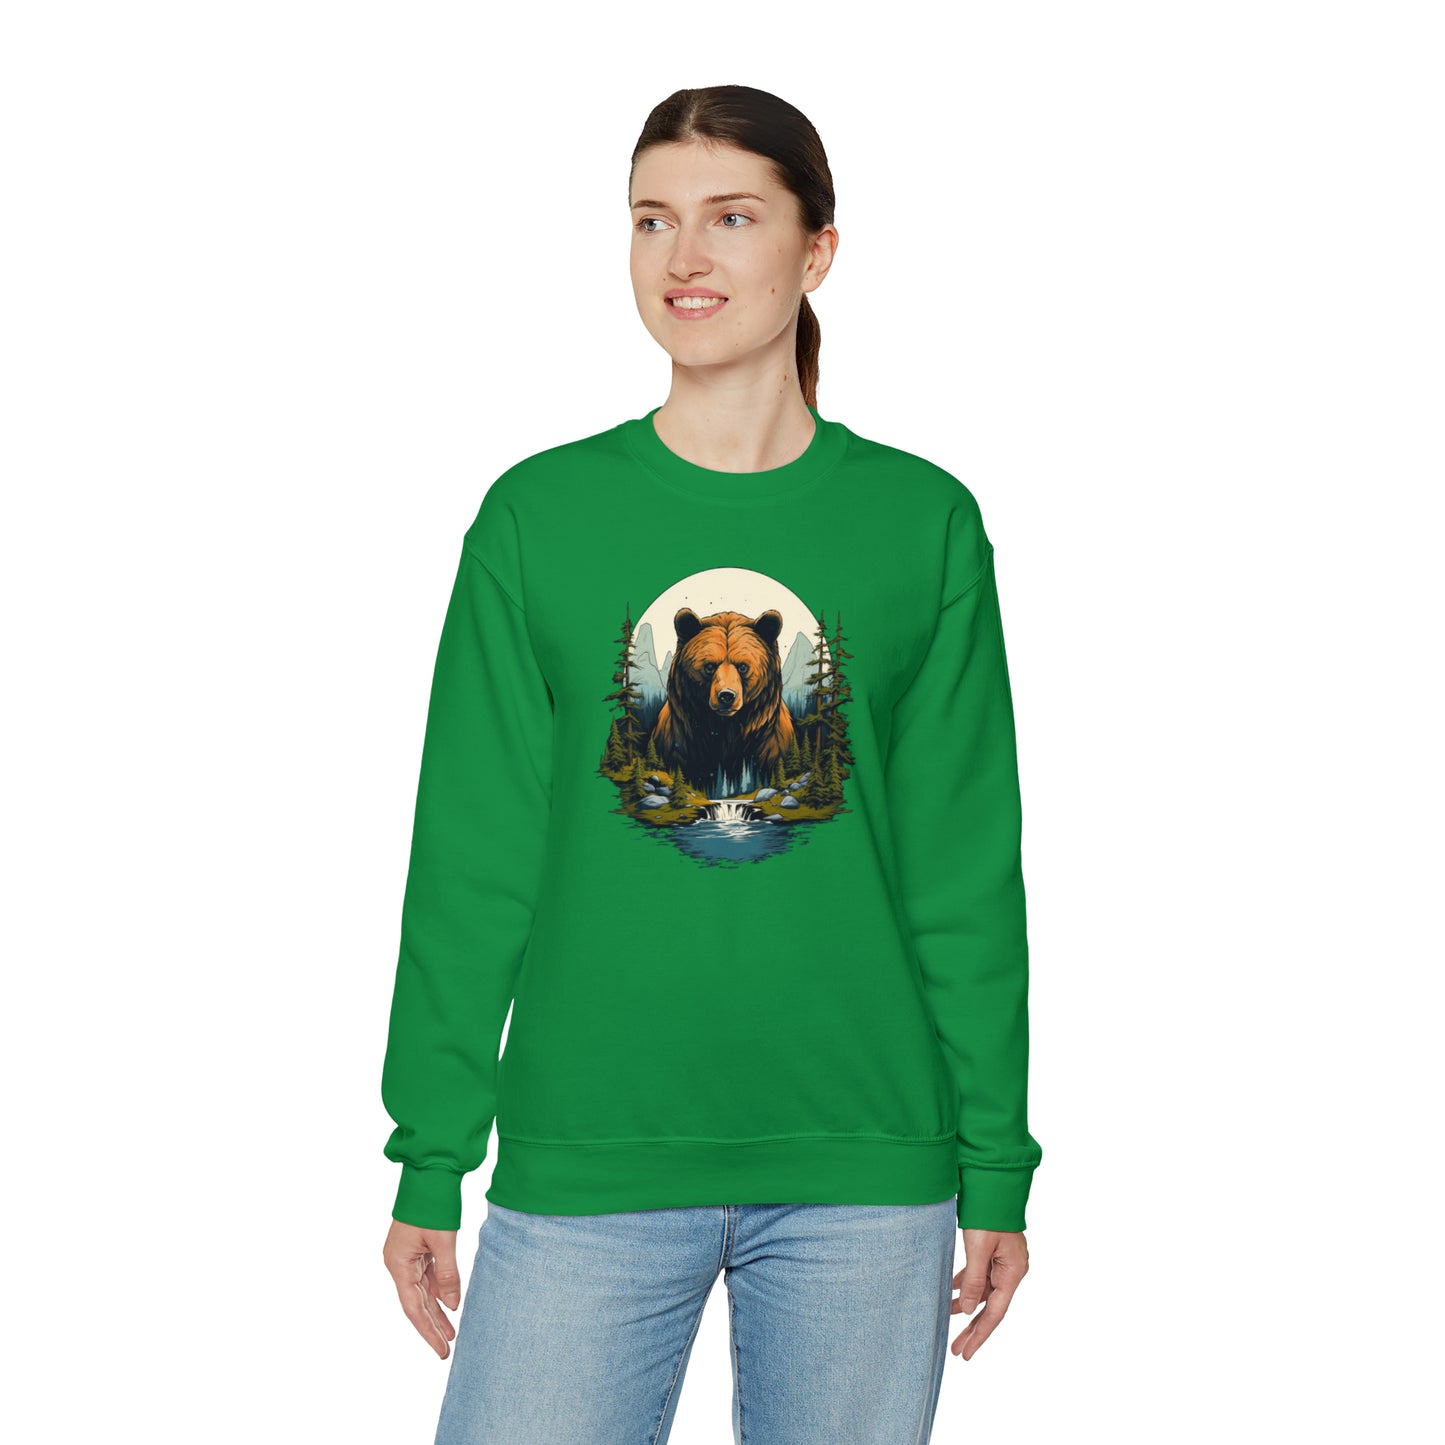 Brown Bear Sweatshirt, Forest River Animal Graphic Crewneck Fleece Cotton Sweater Jumper Pullover Men Women Adult Aesthetic Top Starcove Fashion